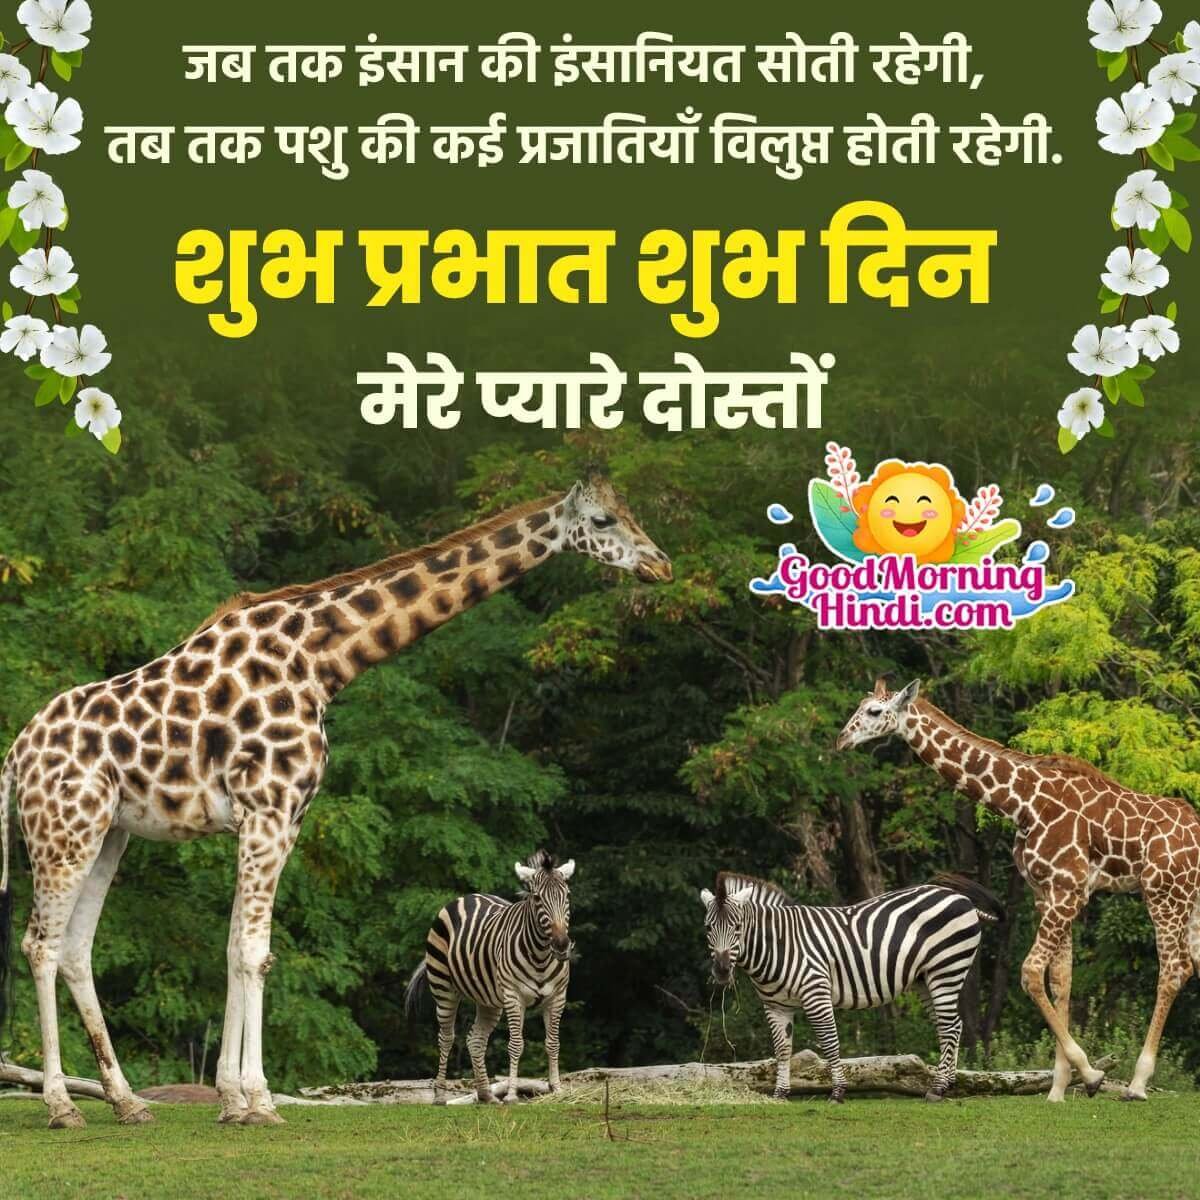 Good Morning Animal Hindi Quotes Image